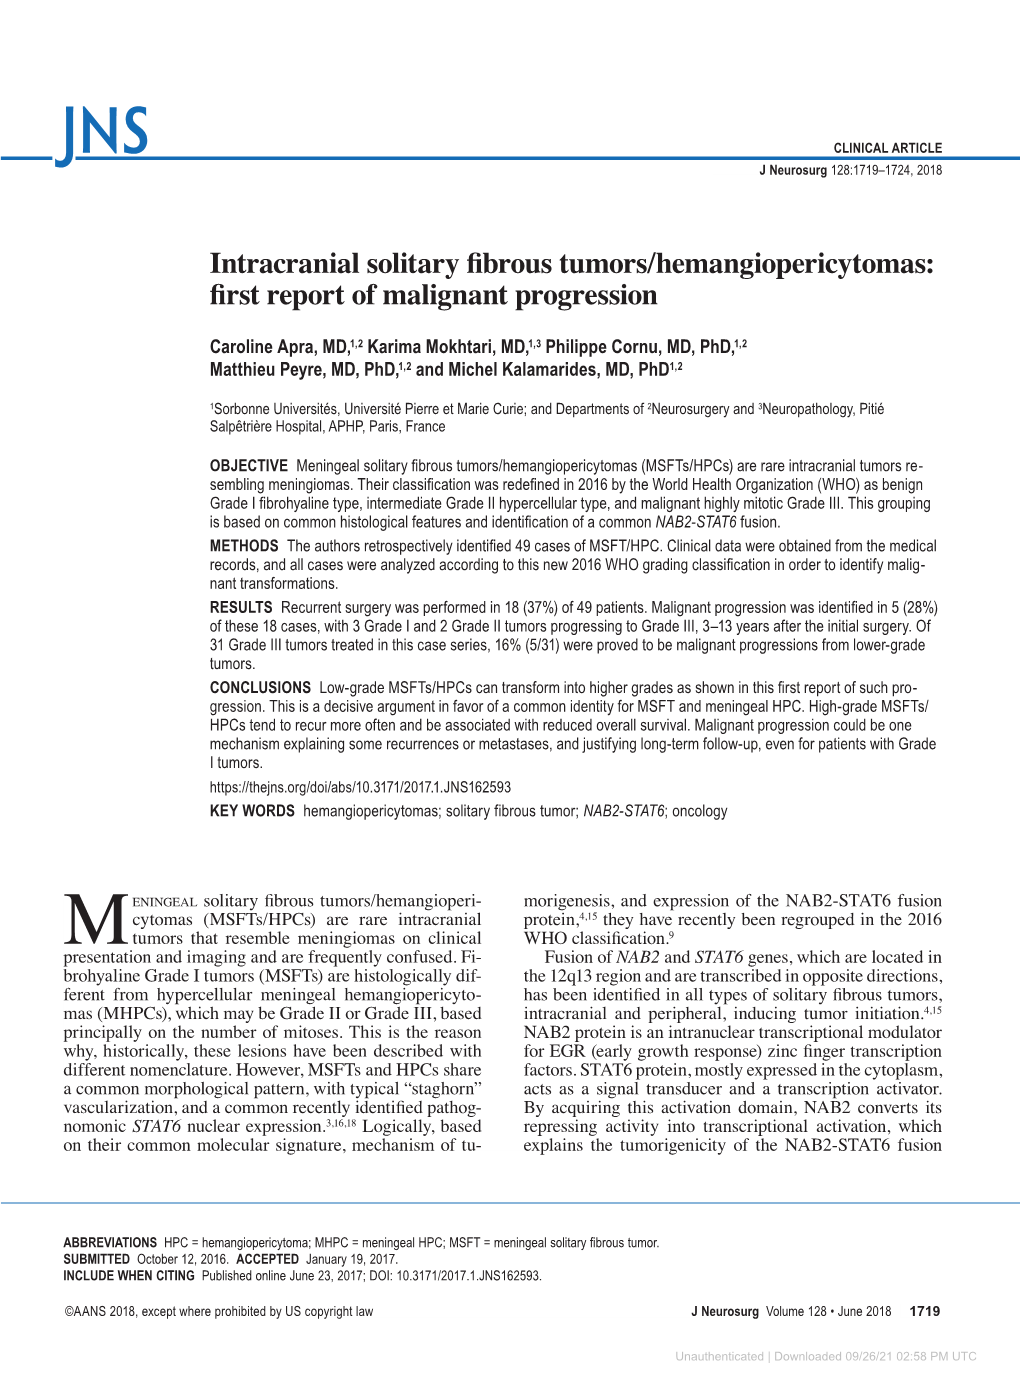 Intracranial Solitary Fibrous Tumors/Hemangiopericytomas: First Report of Malignant Progression